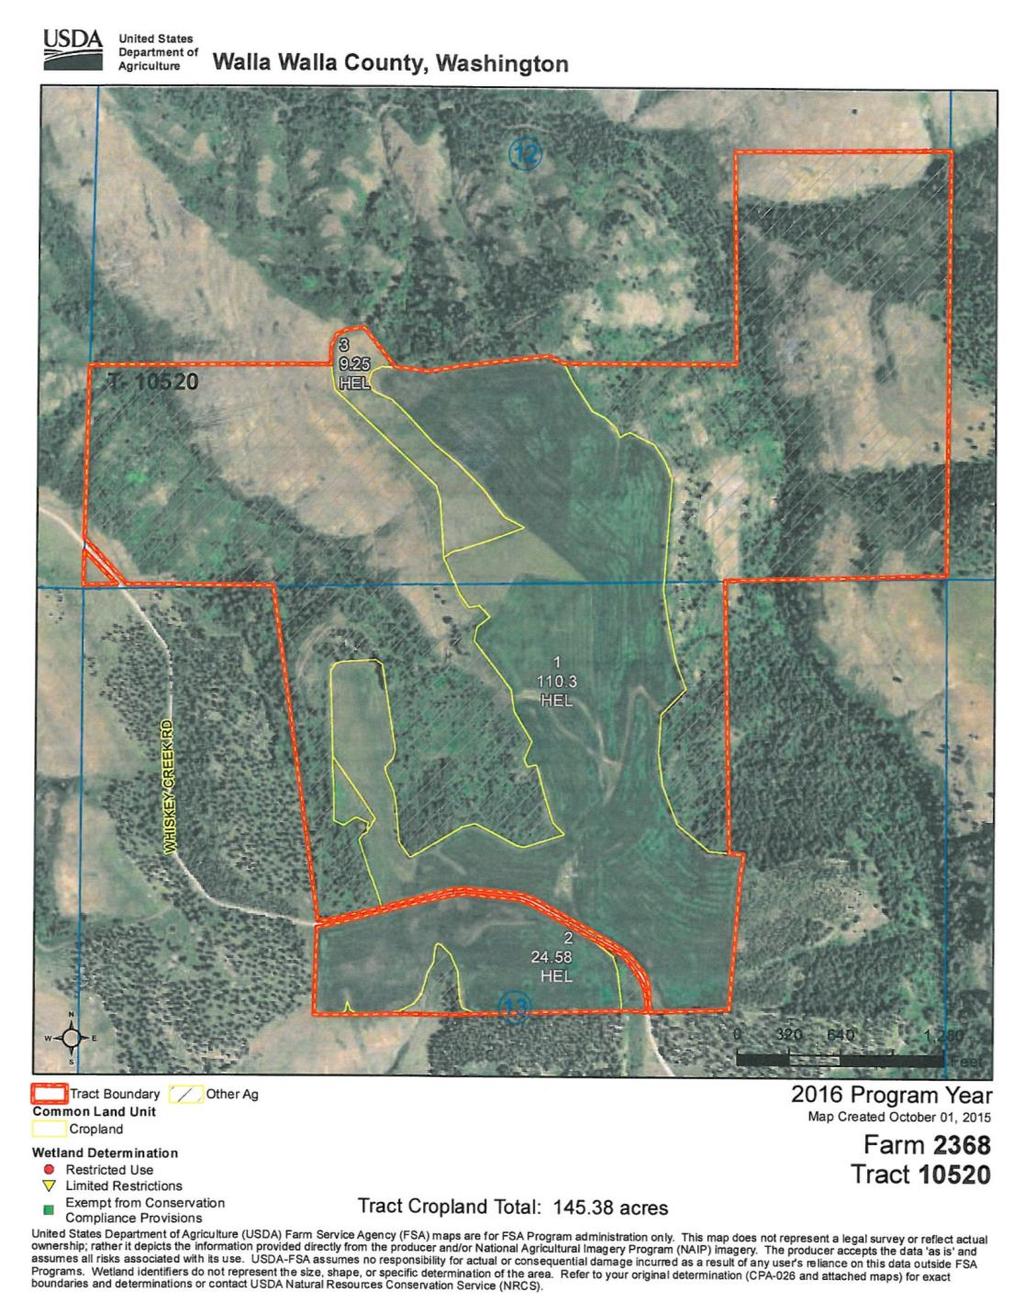 Property Description, continued FSA Aerial Photo